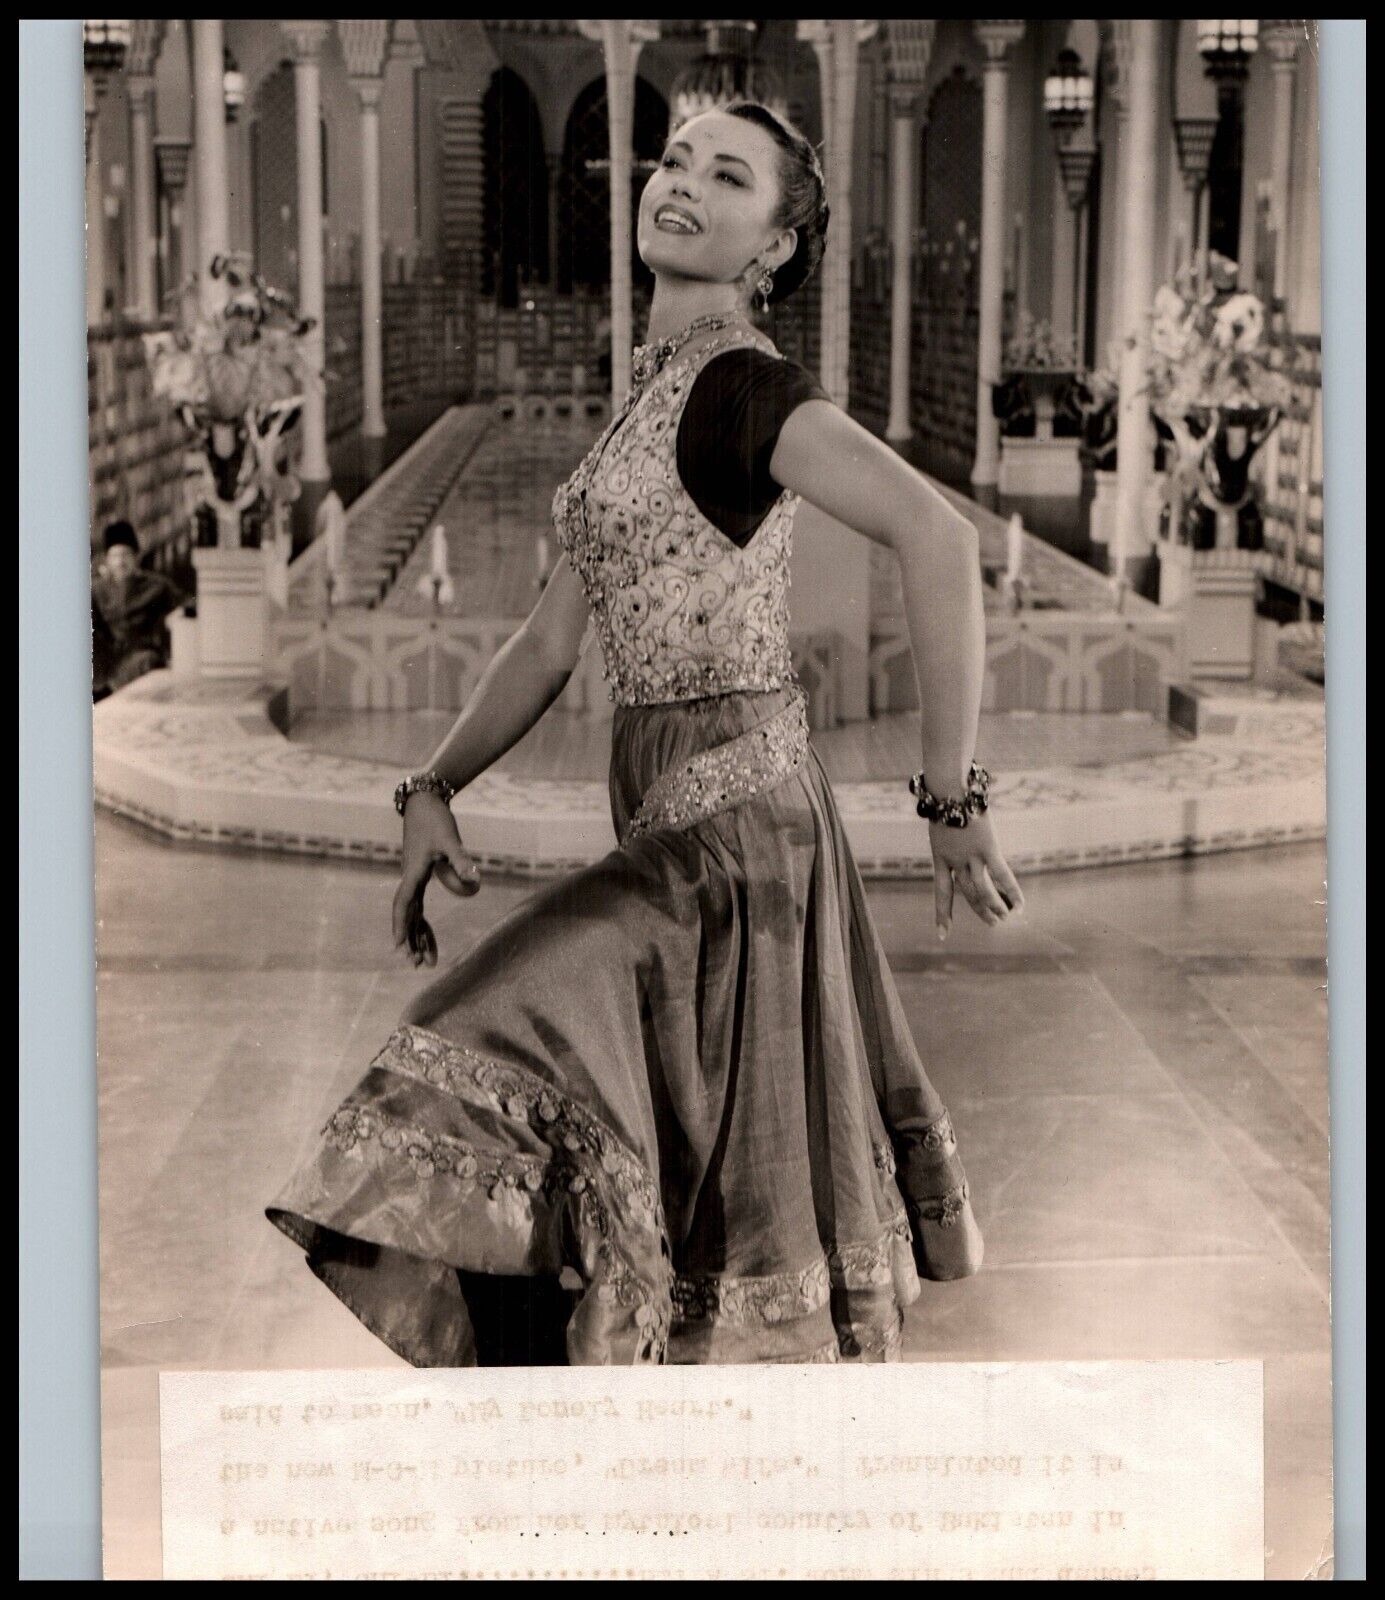 Betta St. John (1950s) Beauty Hollywood Actress Glamorous Pose Photo K 174